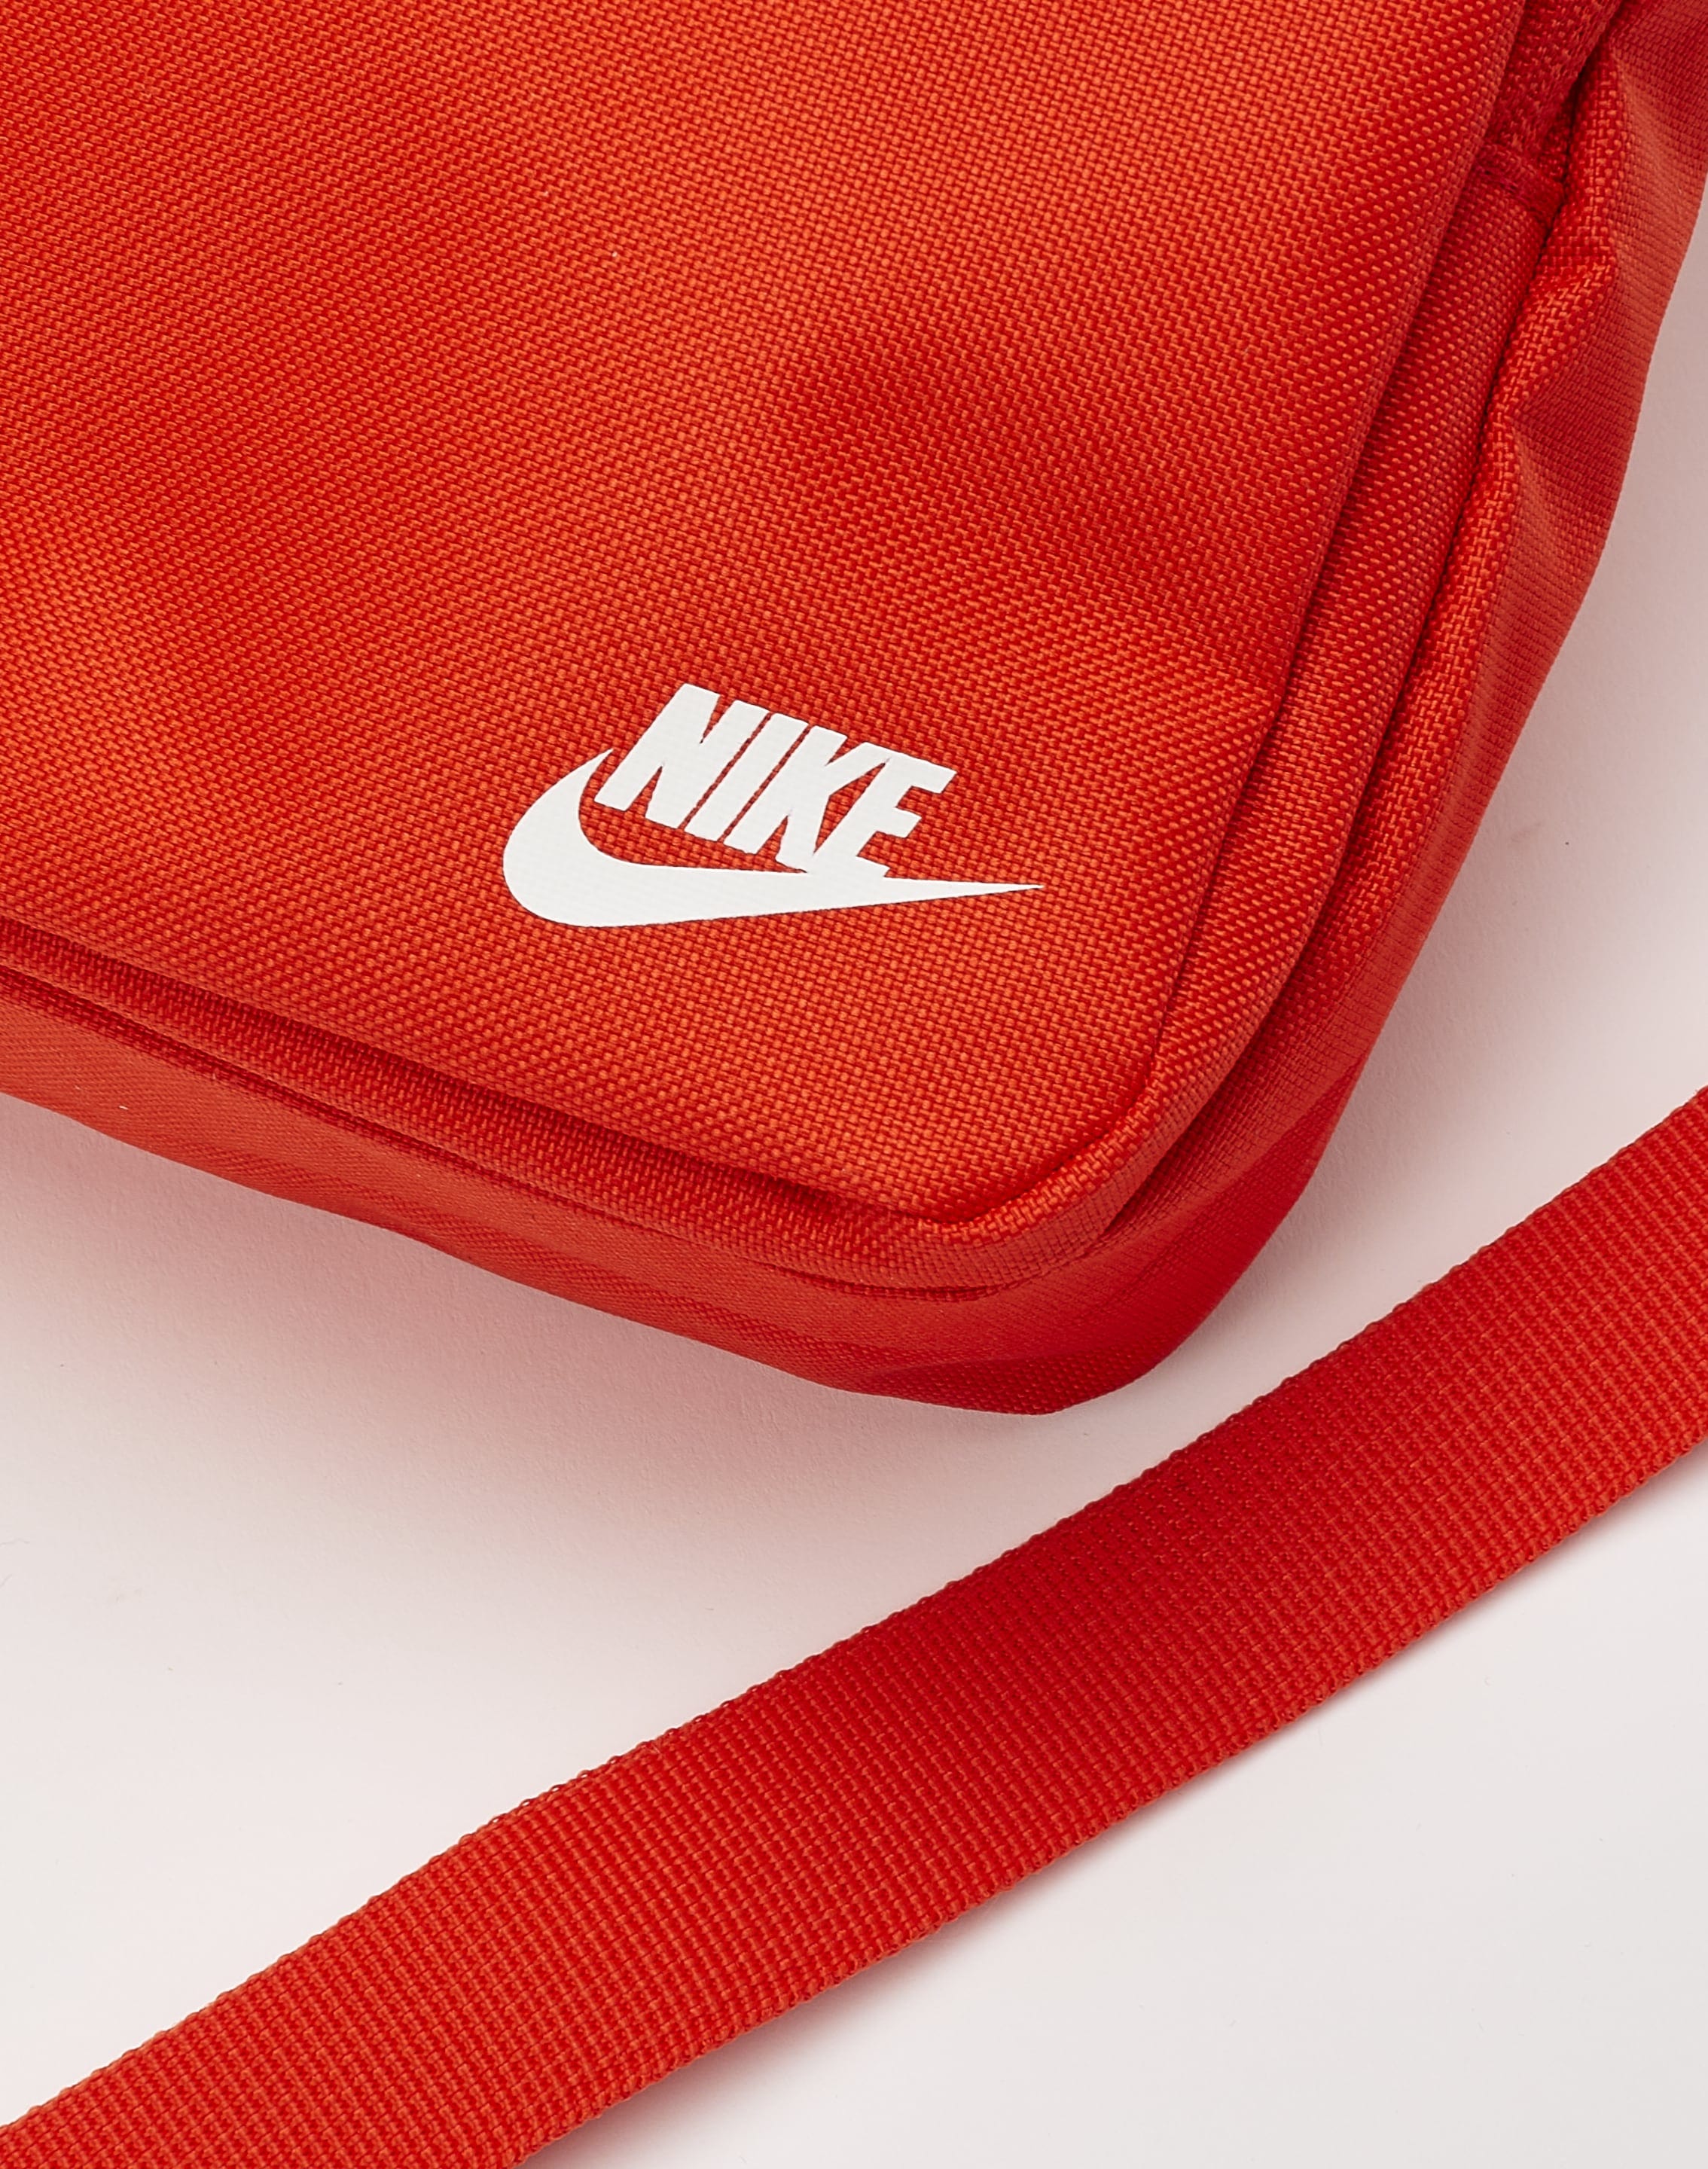 Nike | Bags | Nike Heritage Sports Crossbody Bag | Poshmark